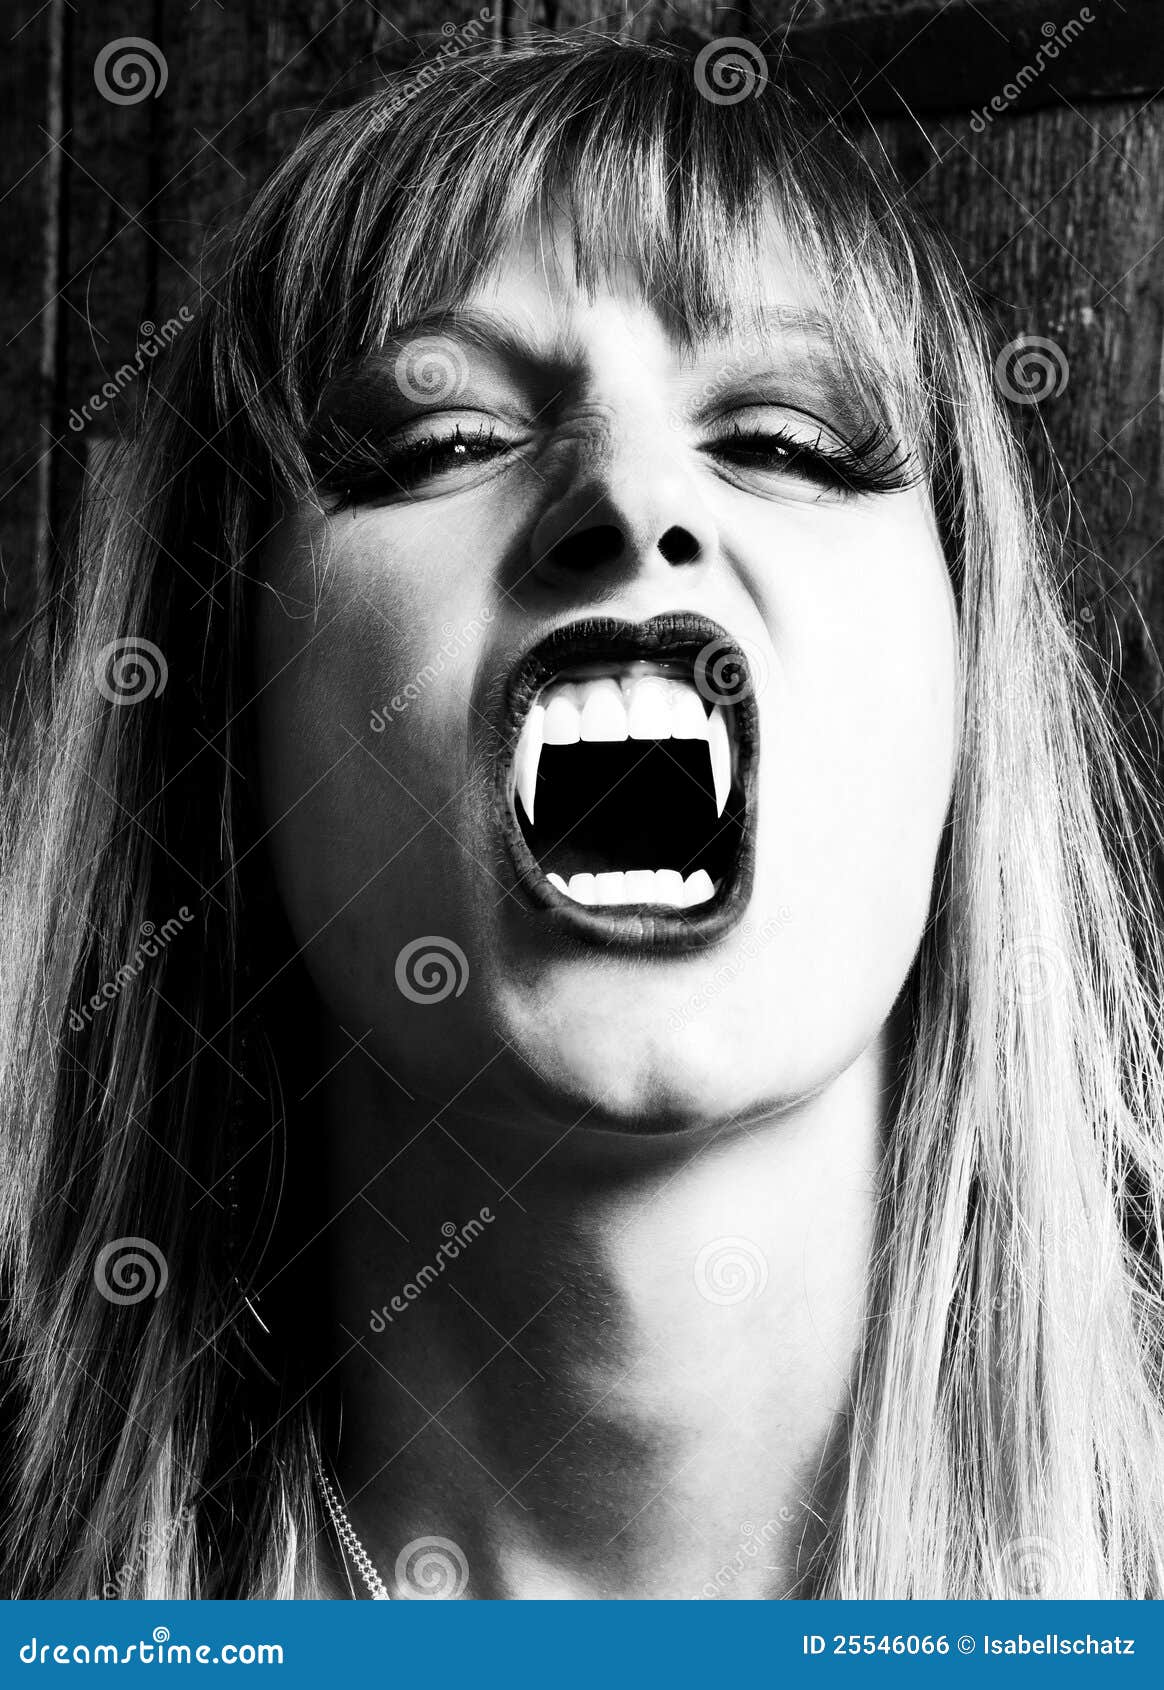 female vampire showing her fangs